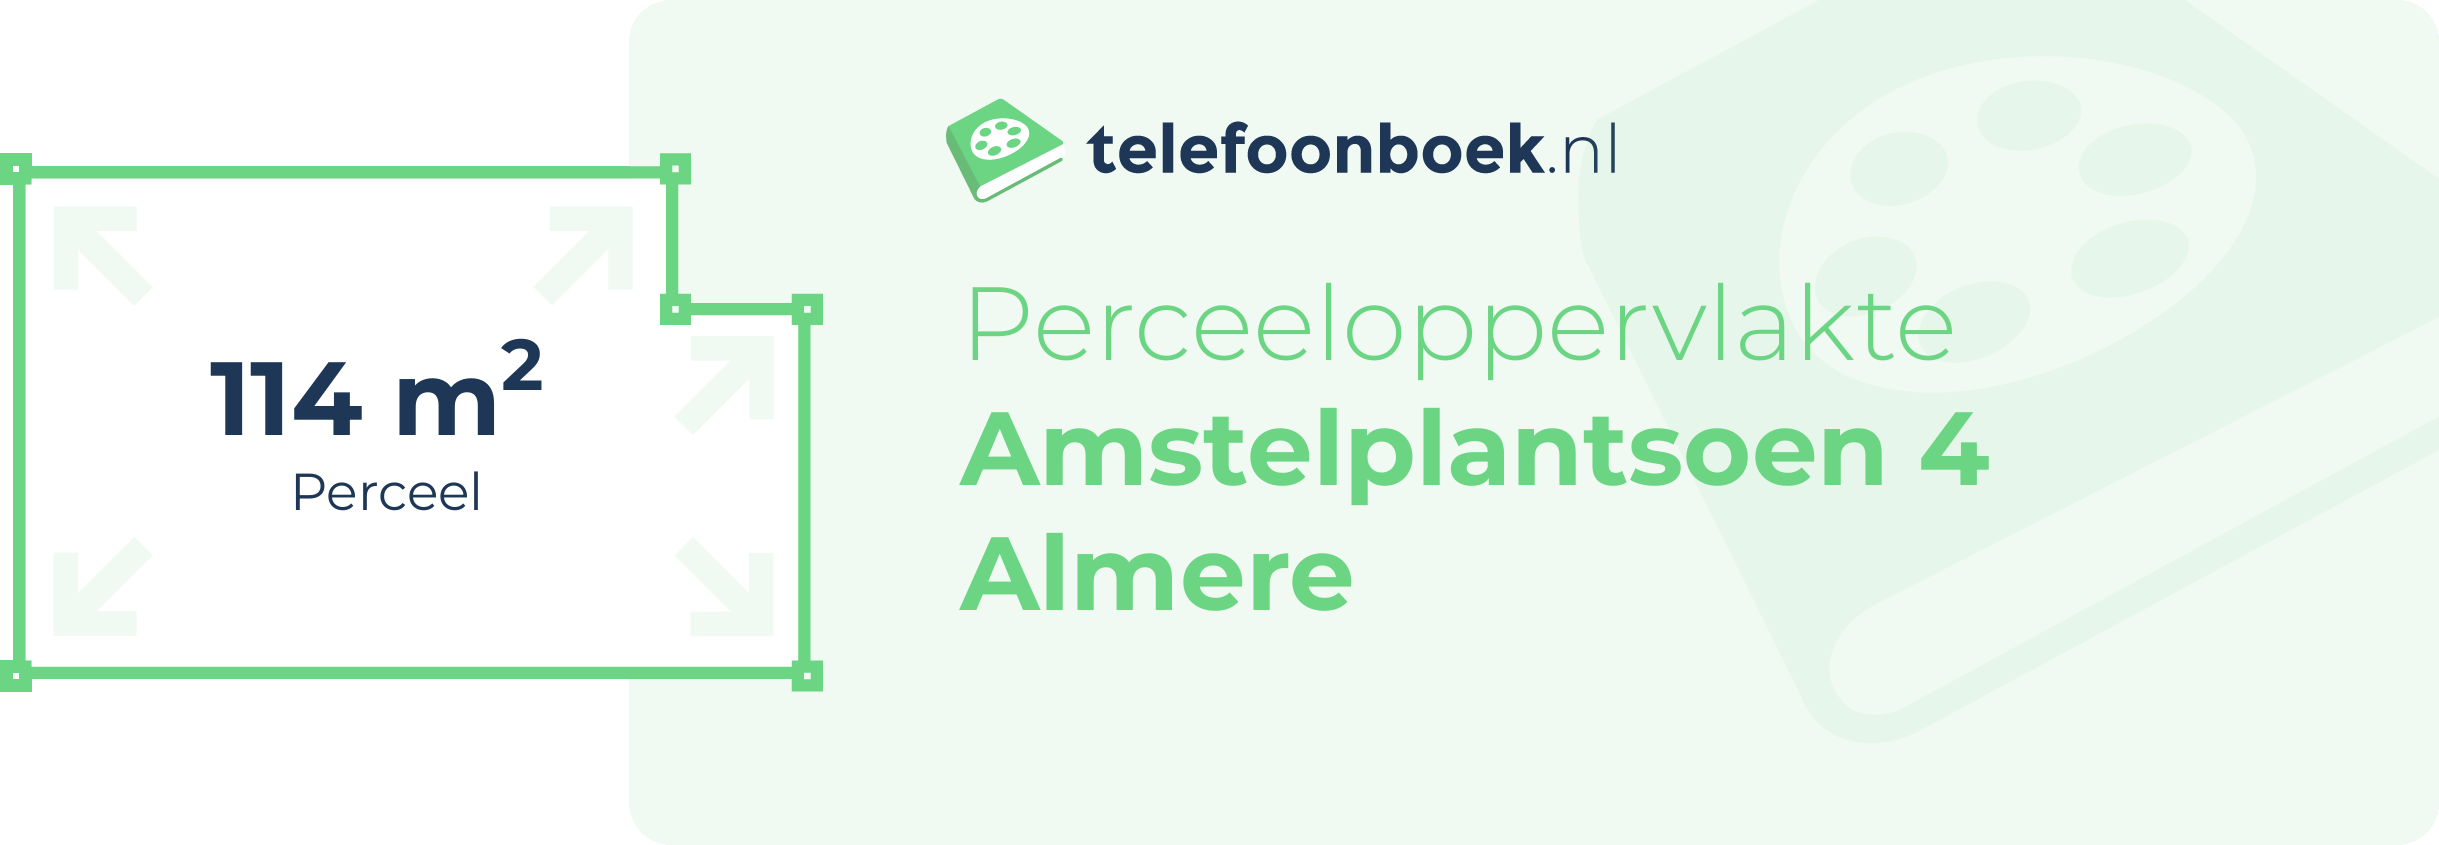 Perceeloppervlakte Amstelplantsoen 4 Almere